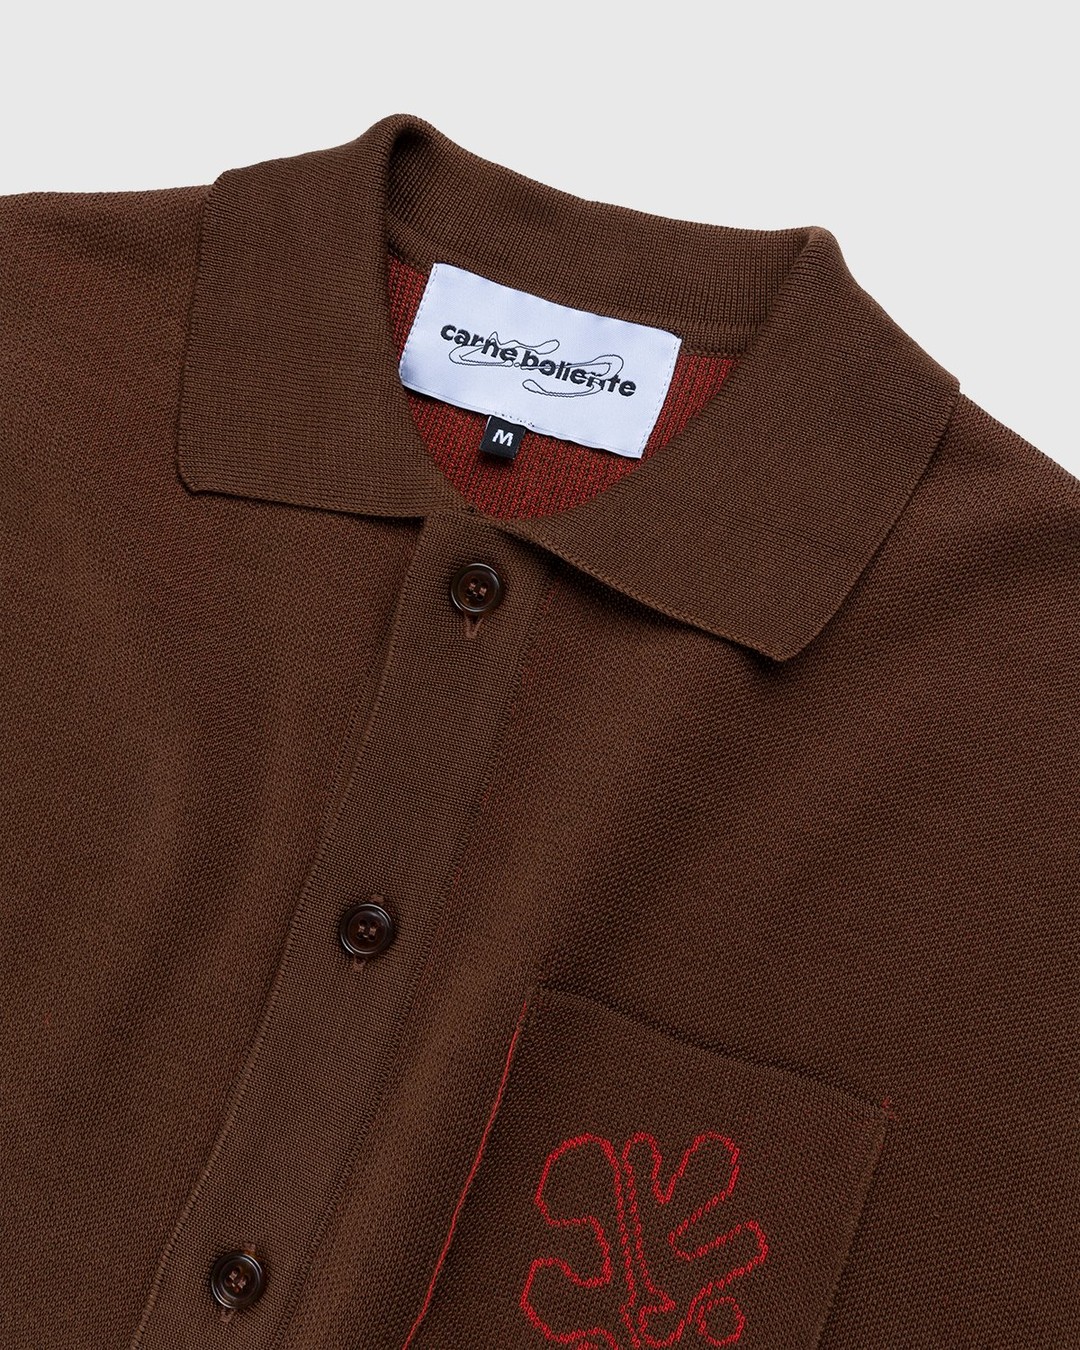 Carne Bollente – Upside Down Knit Shirt Brown - Knitwear - Brown - Image 4